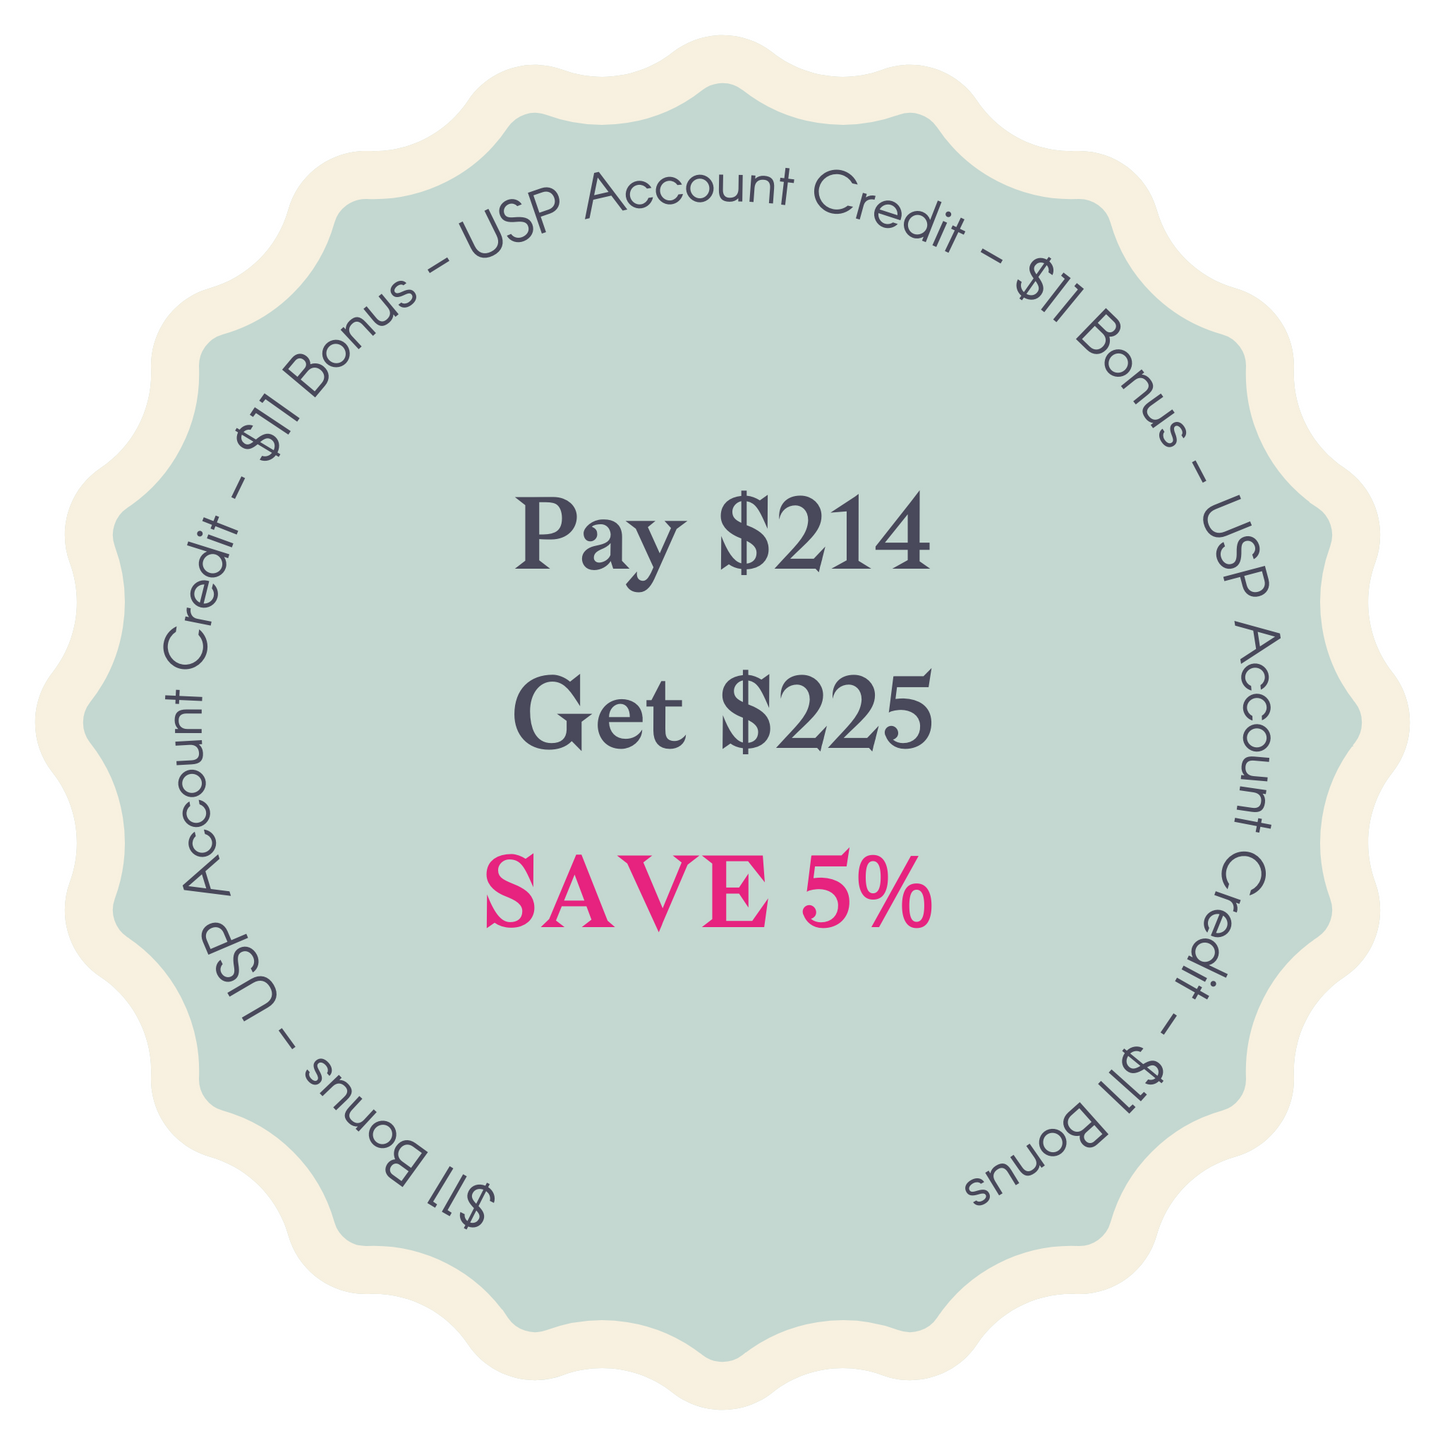 USP Credit $225 - Save 5%